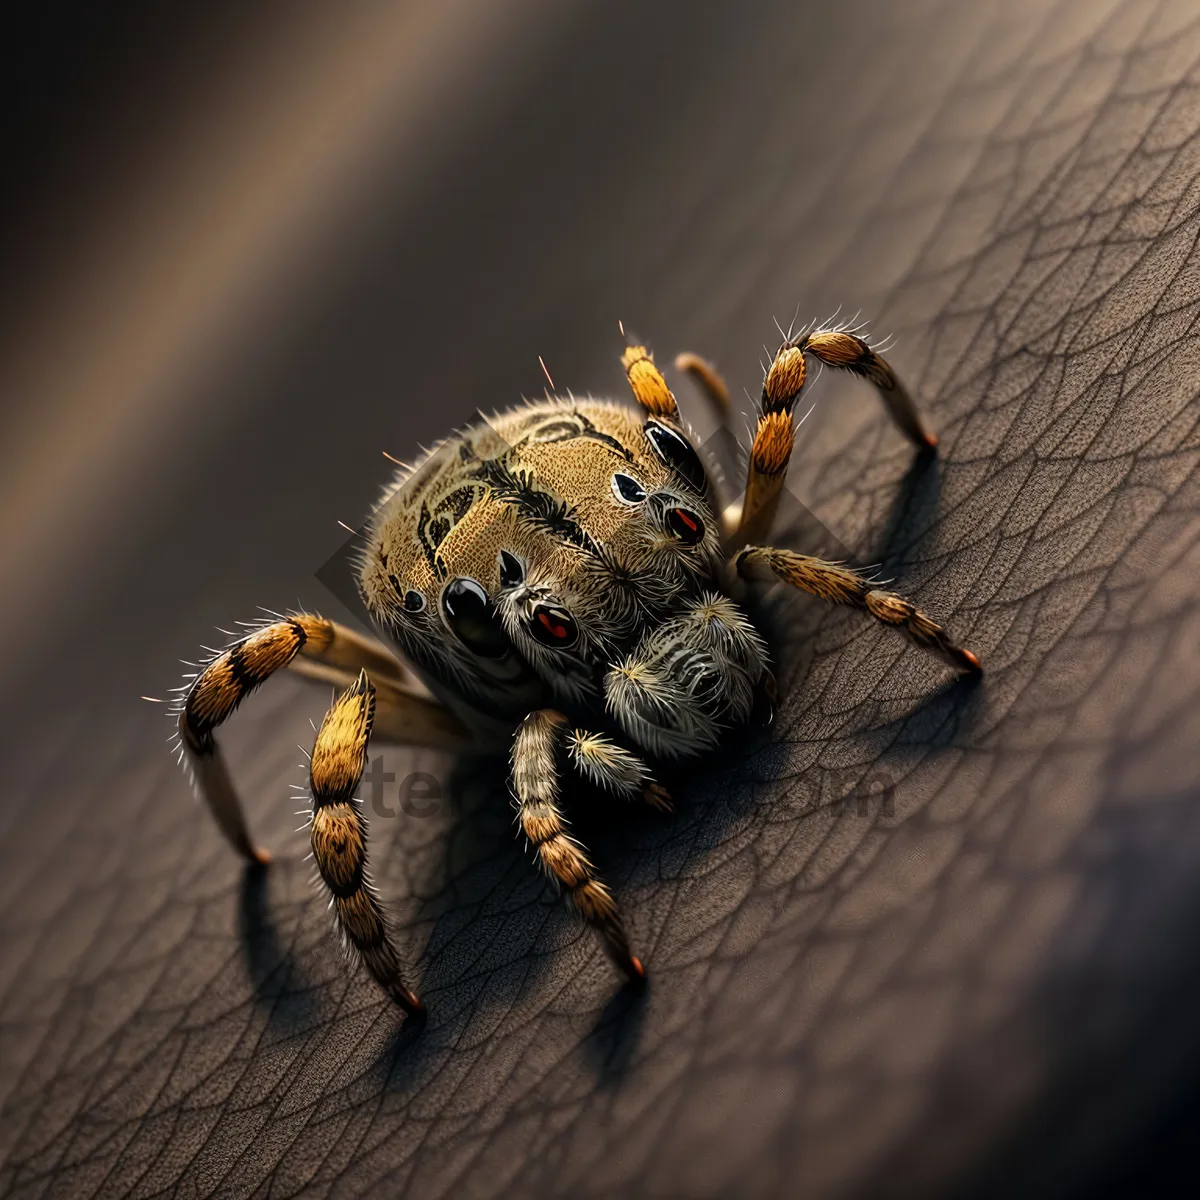 Picture of Creepy Crawly Arachnid Spider in Garden